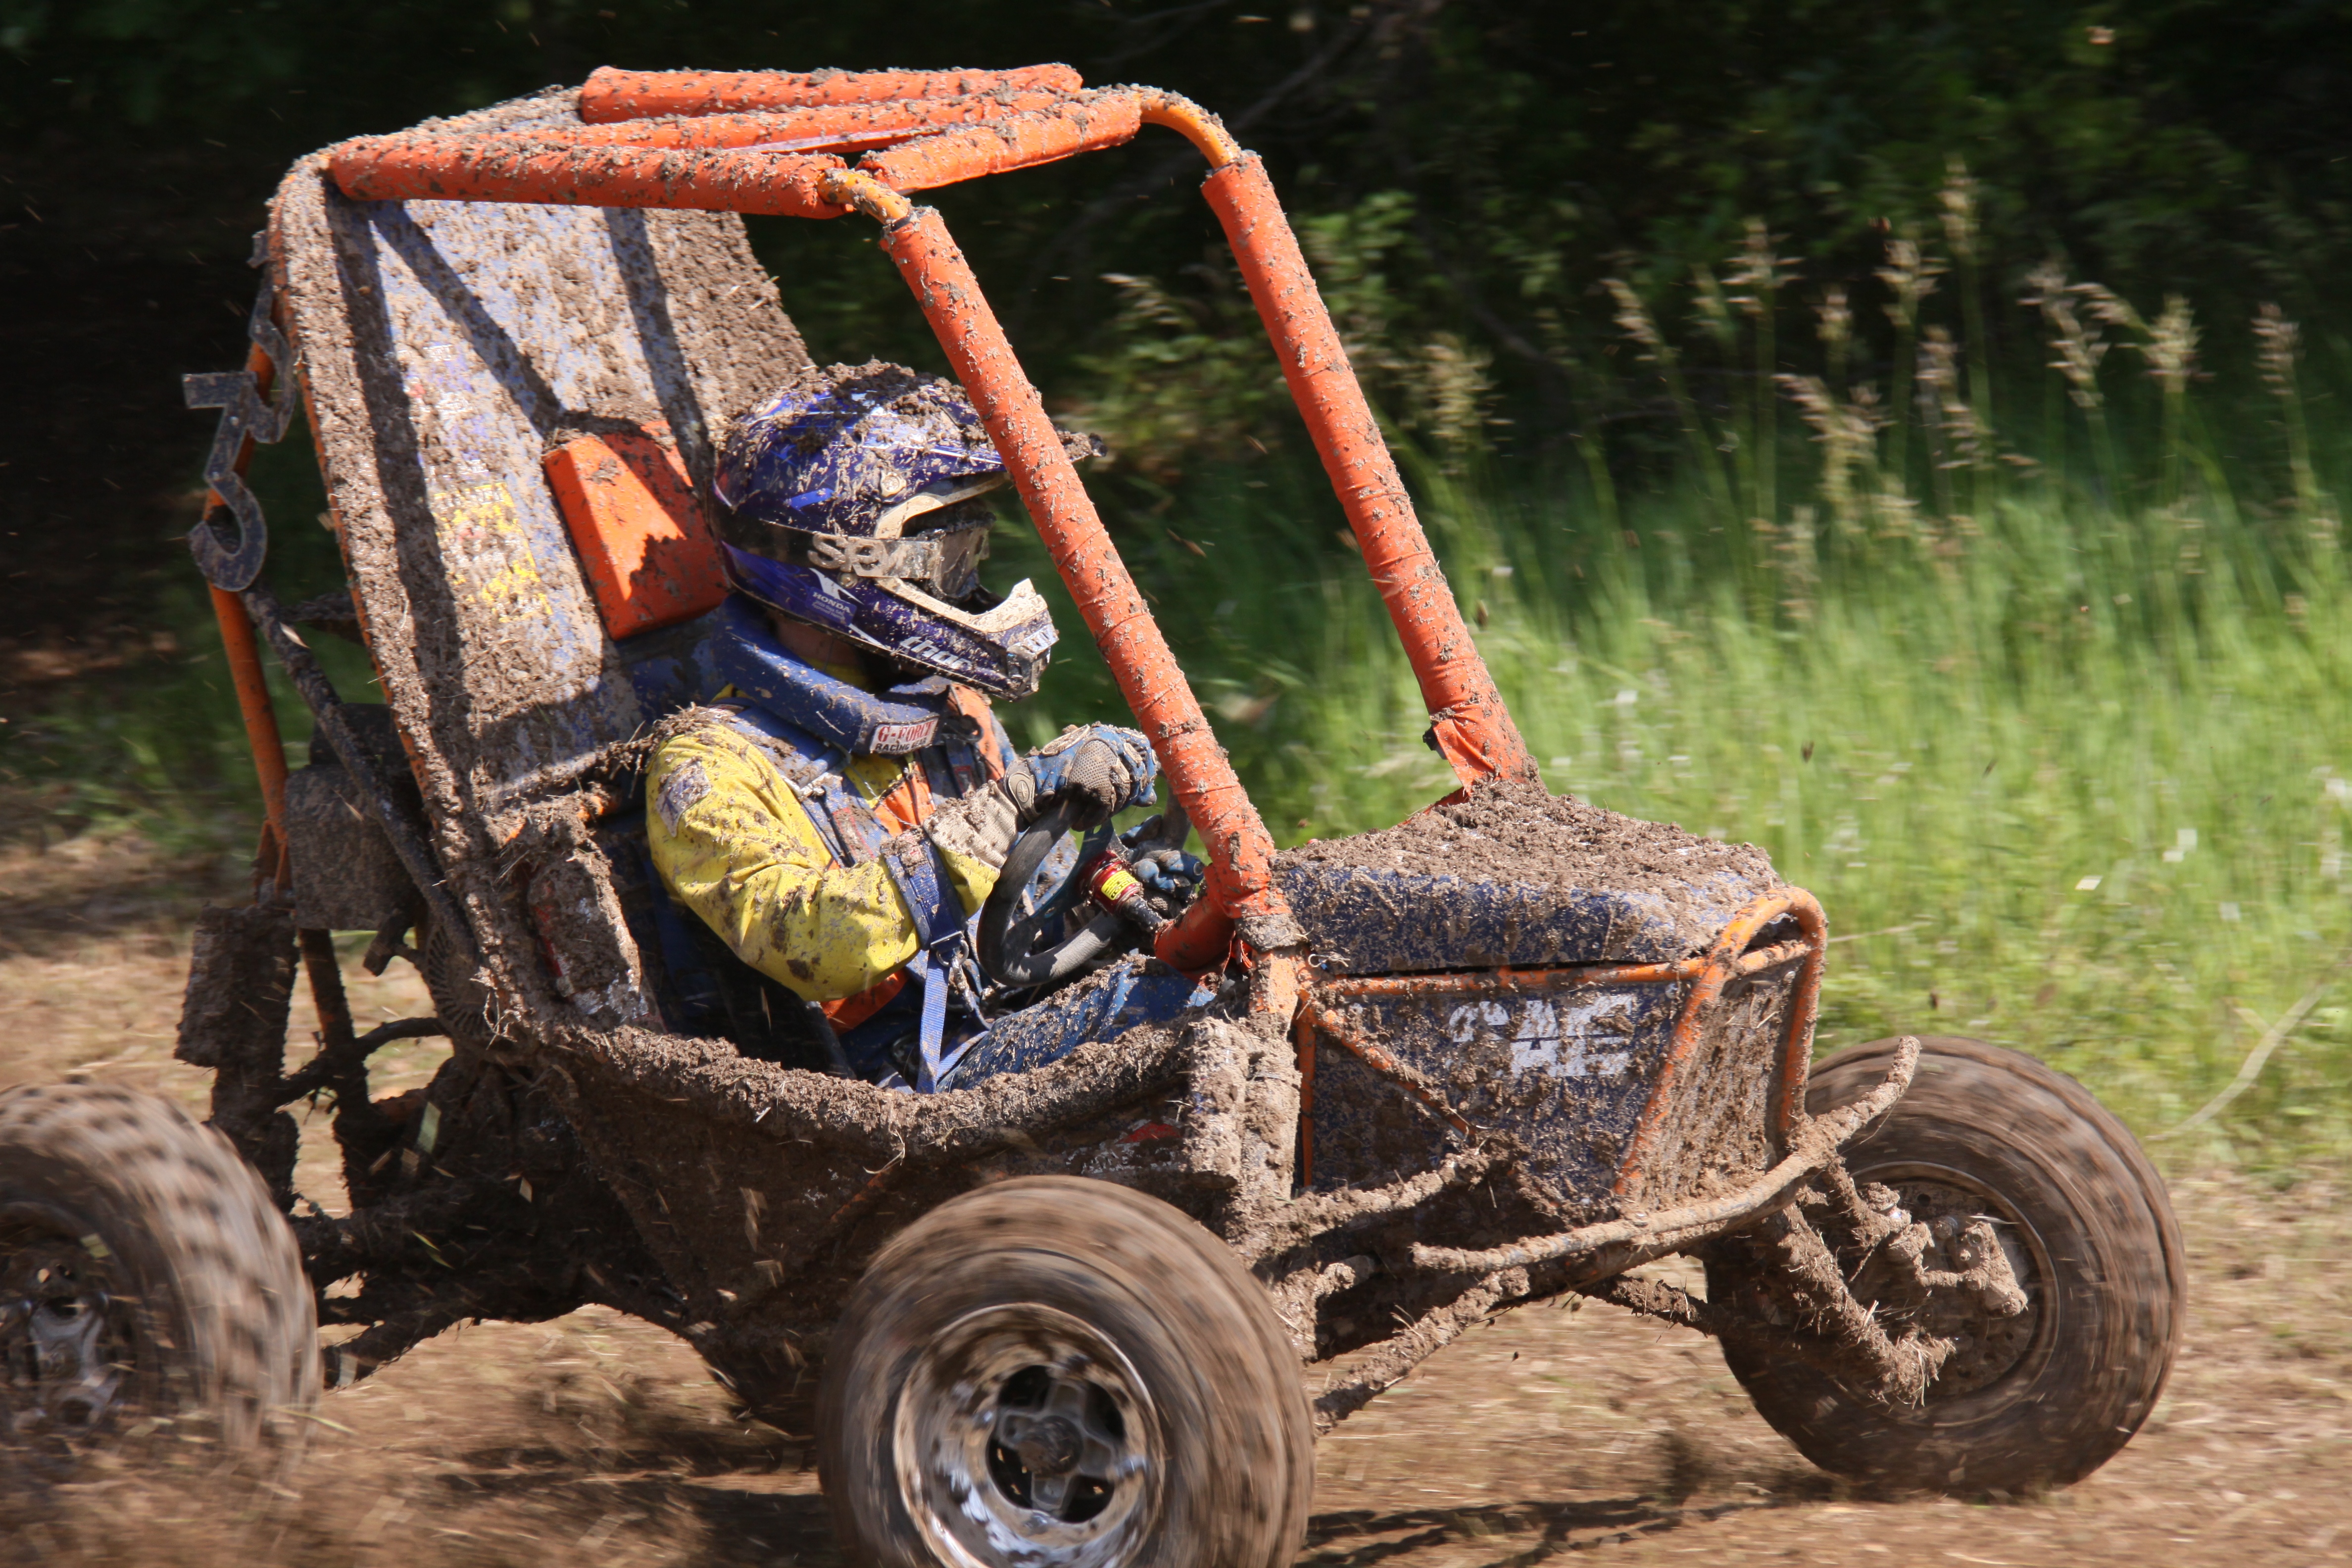 Baja racing a go cart in the mud